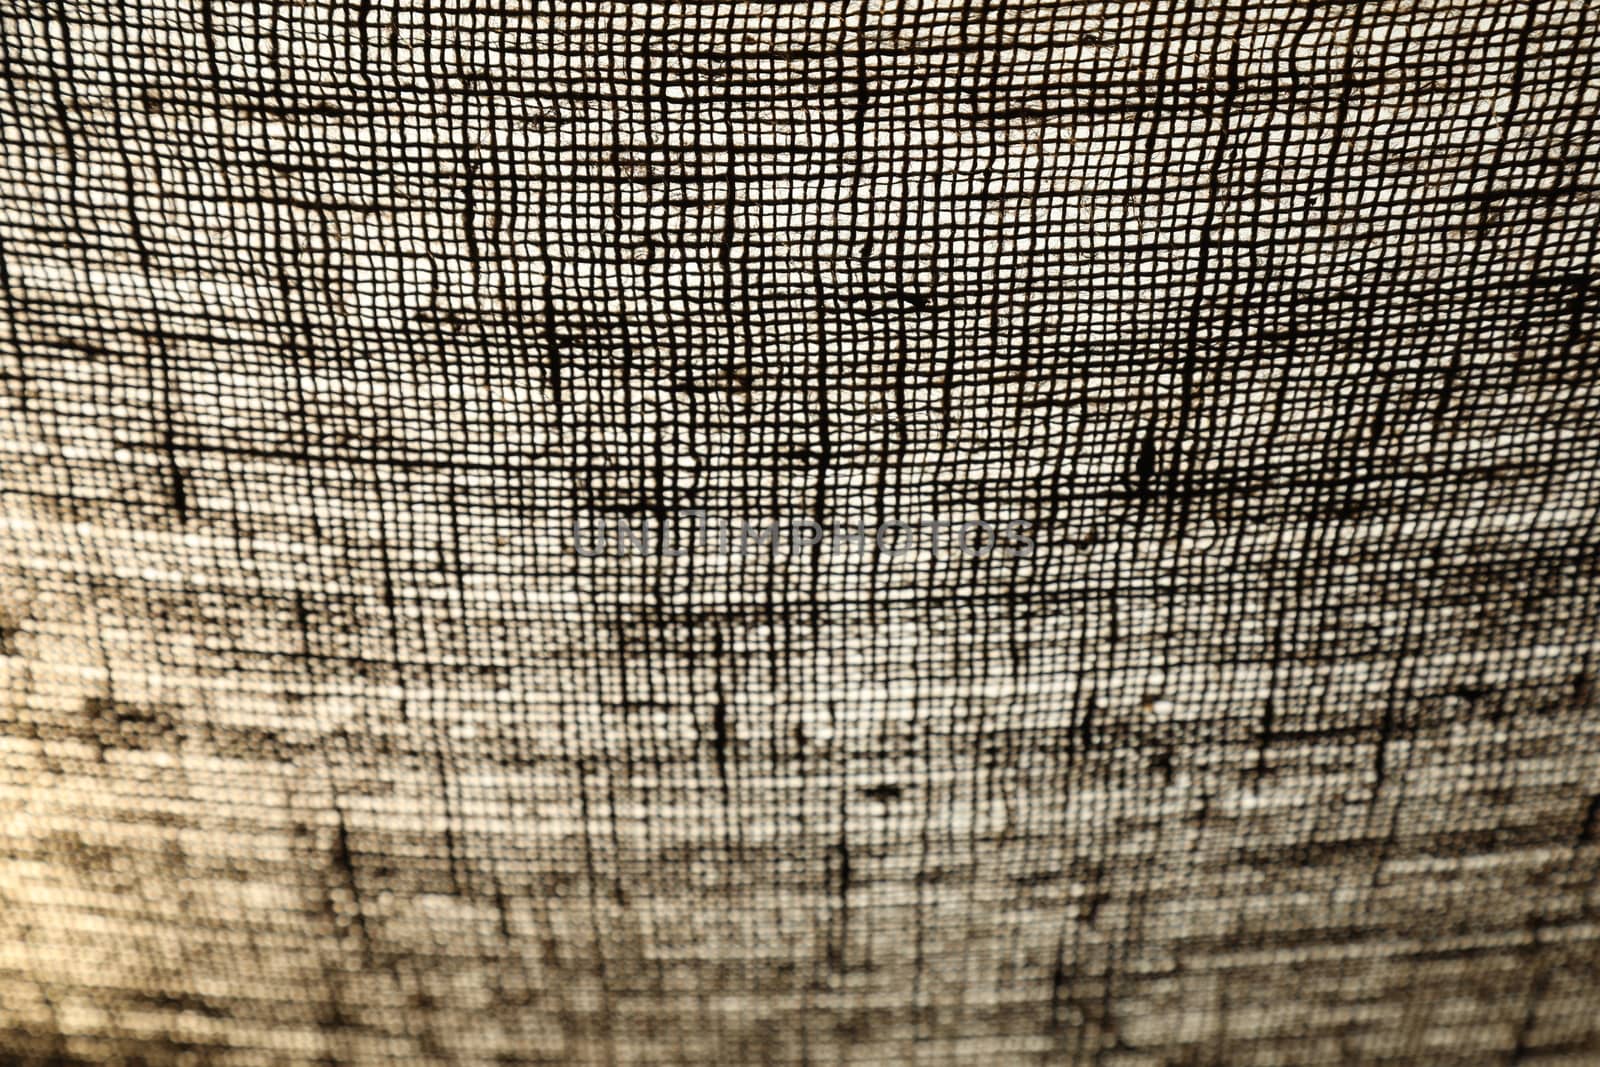 Abstract Cloth Texture by rajastills